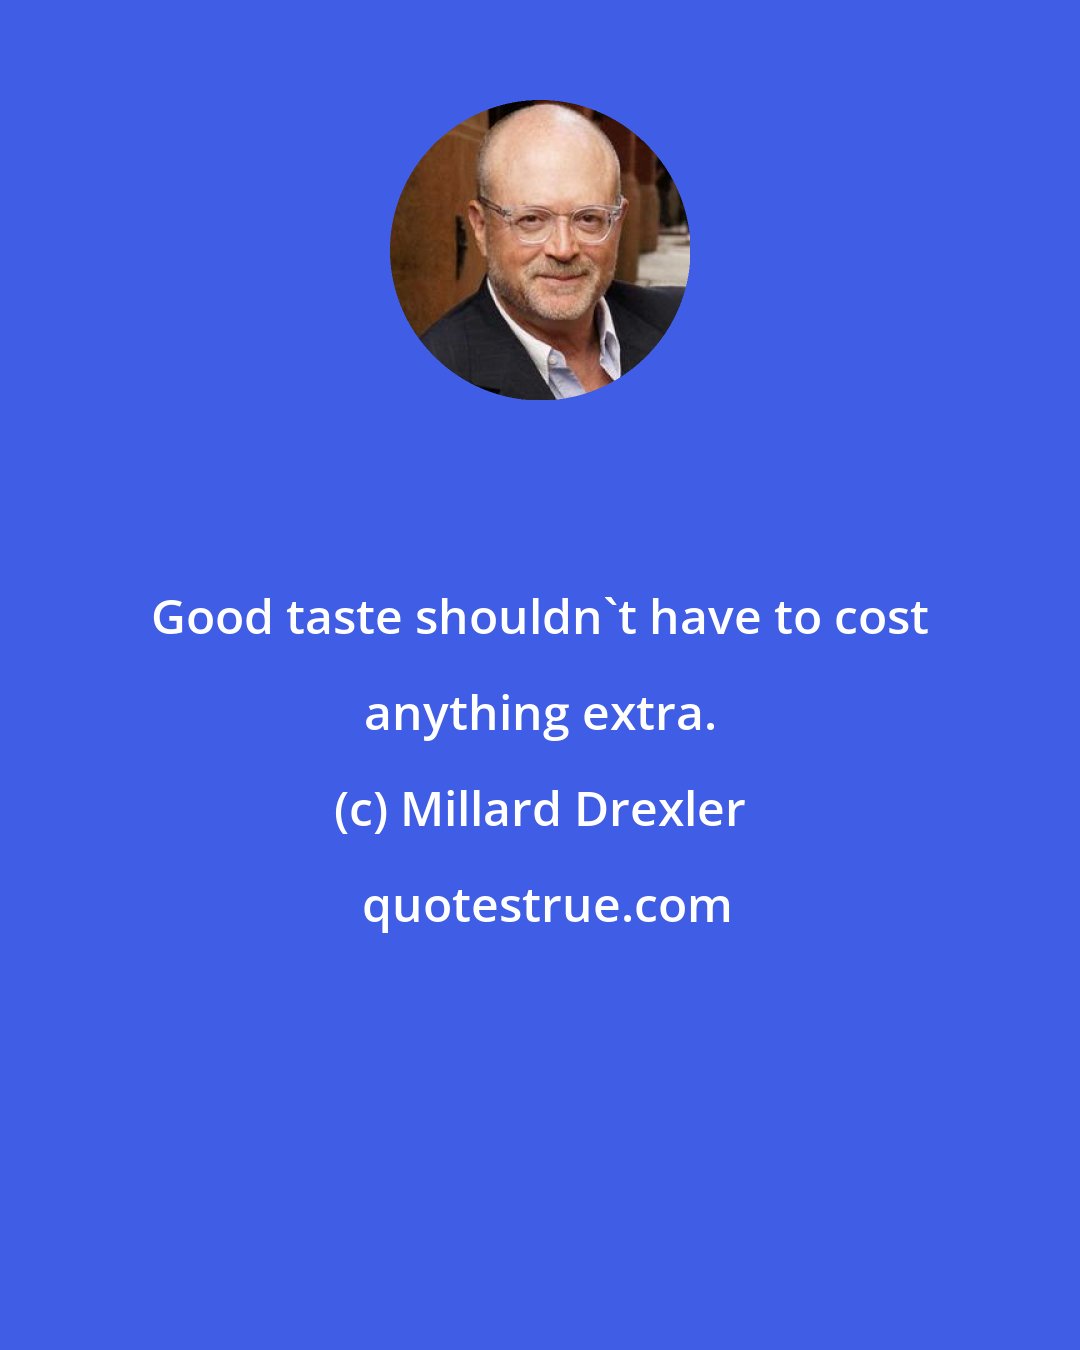 Millard Drexler: Good taste shouldn't have to cost anything extra.